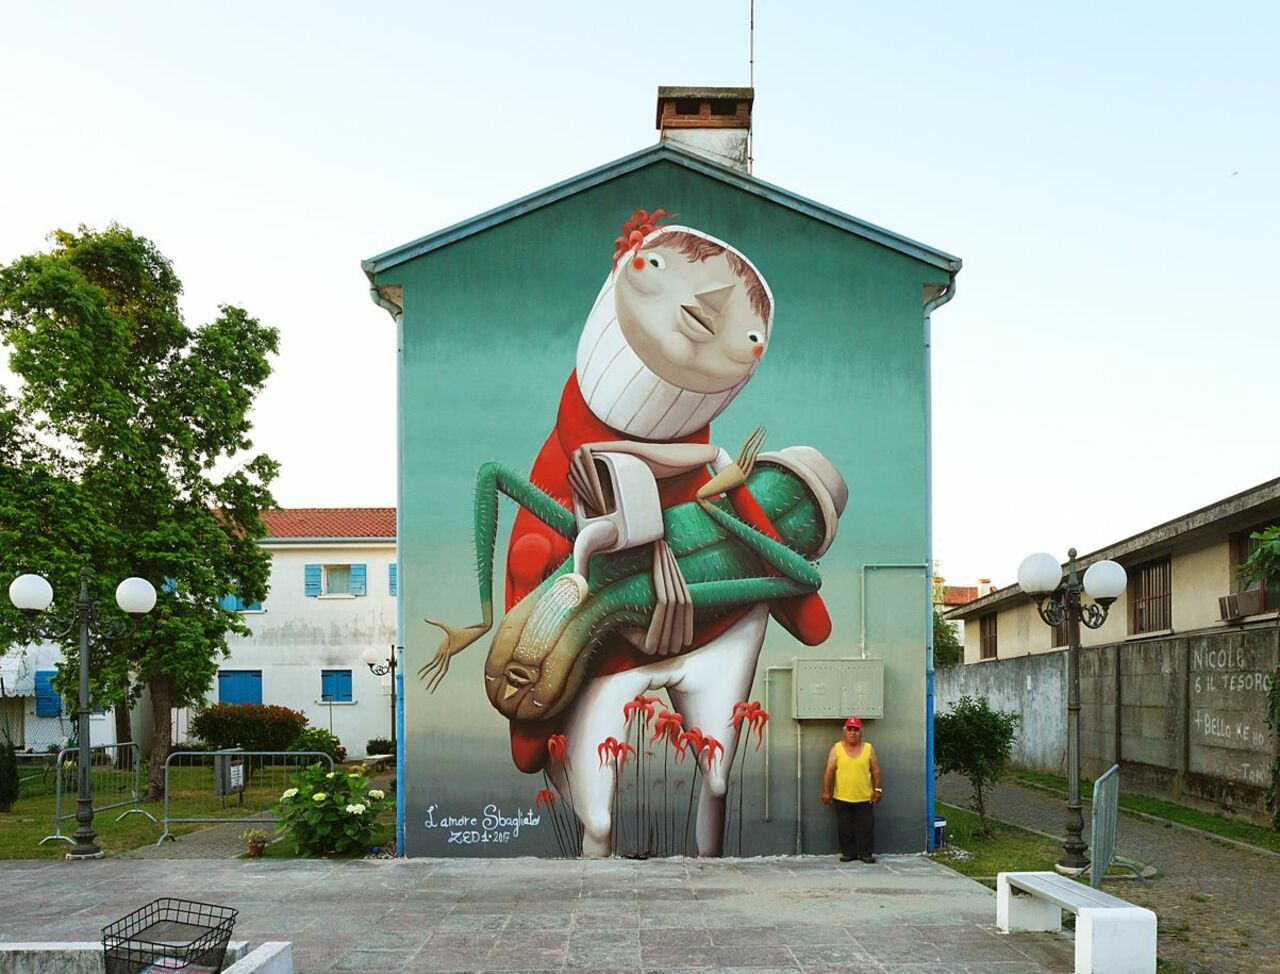 “The Wrong Love” by ZED1 in Dolo, Italy #streetart #mural #graffiti #art https://t.co/SY0R9HuzJ7